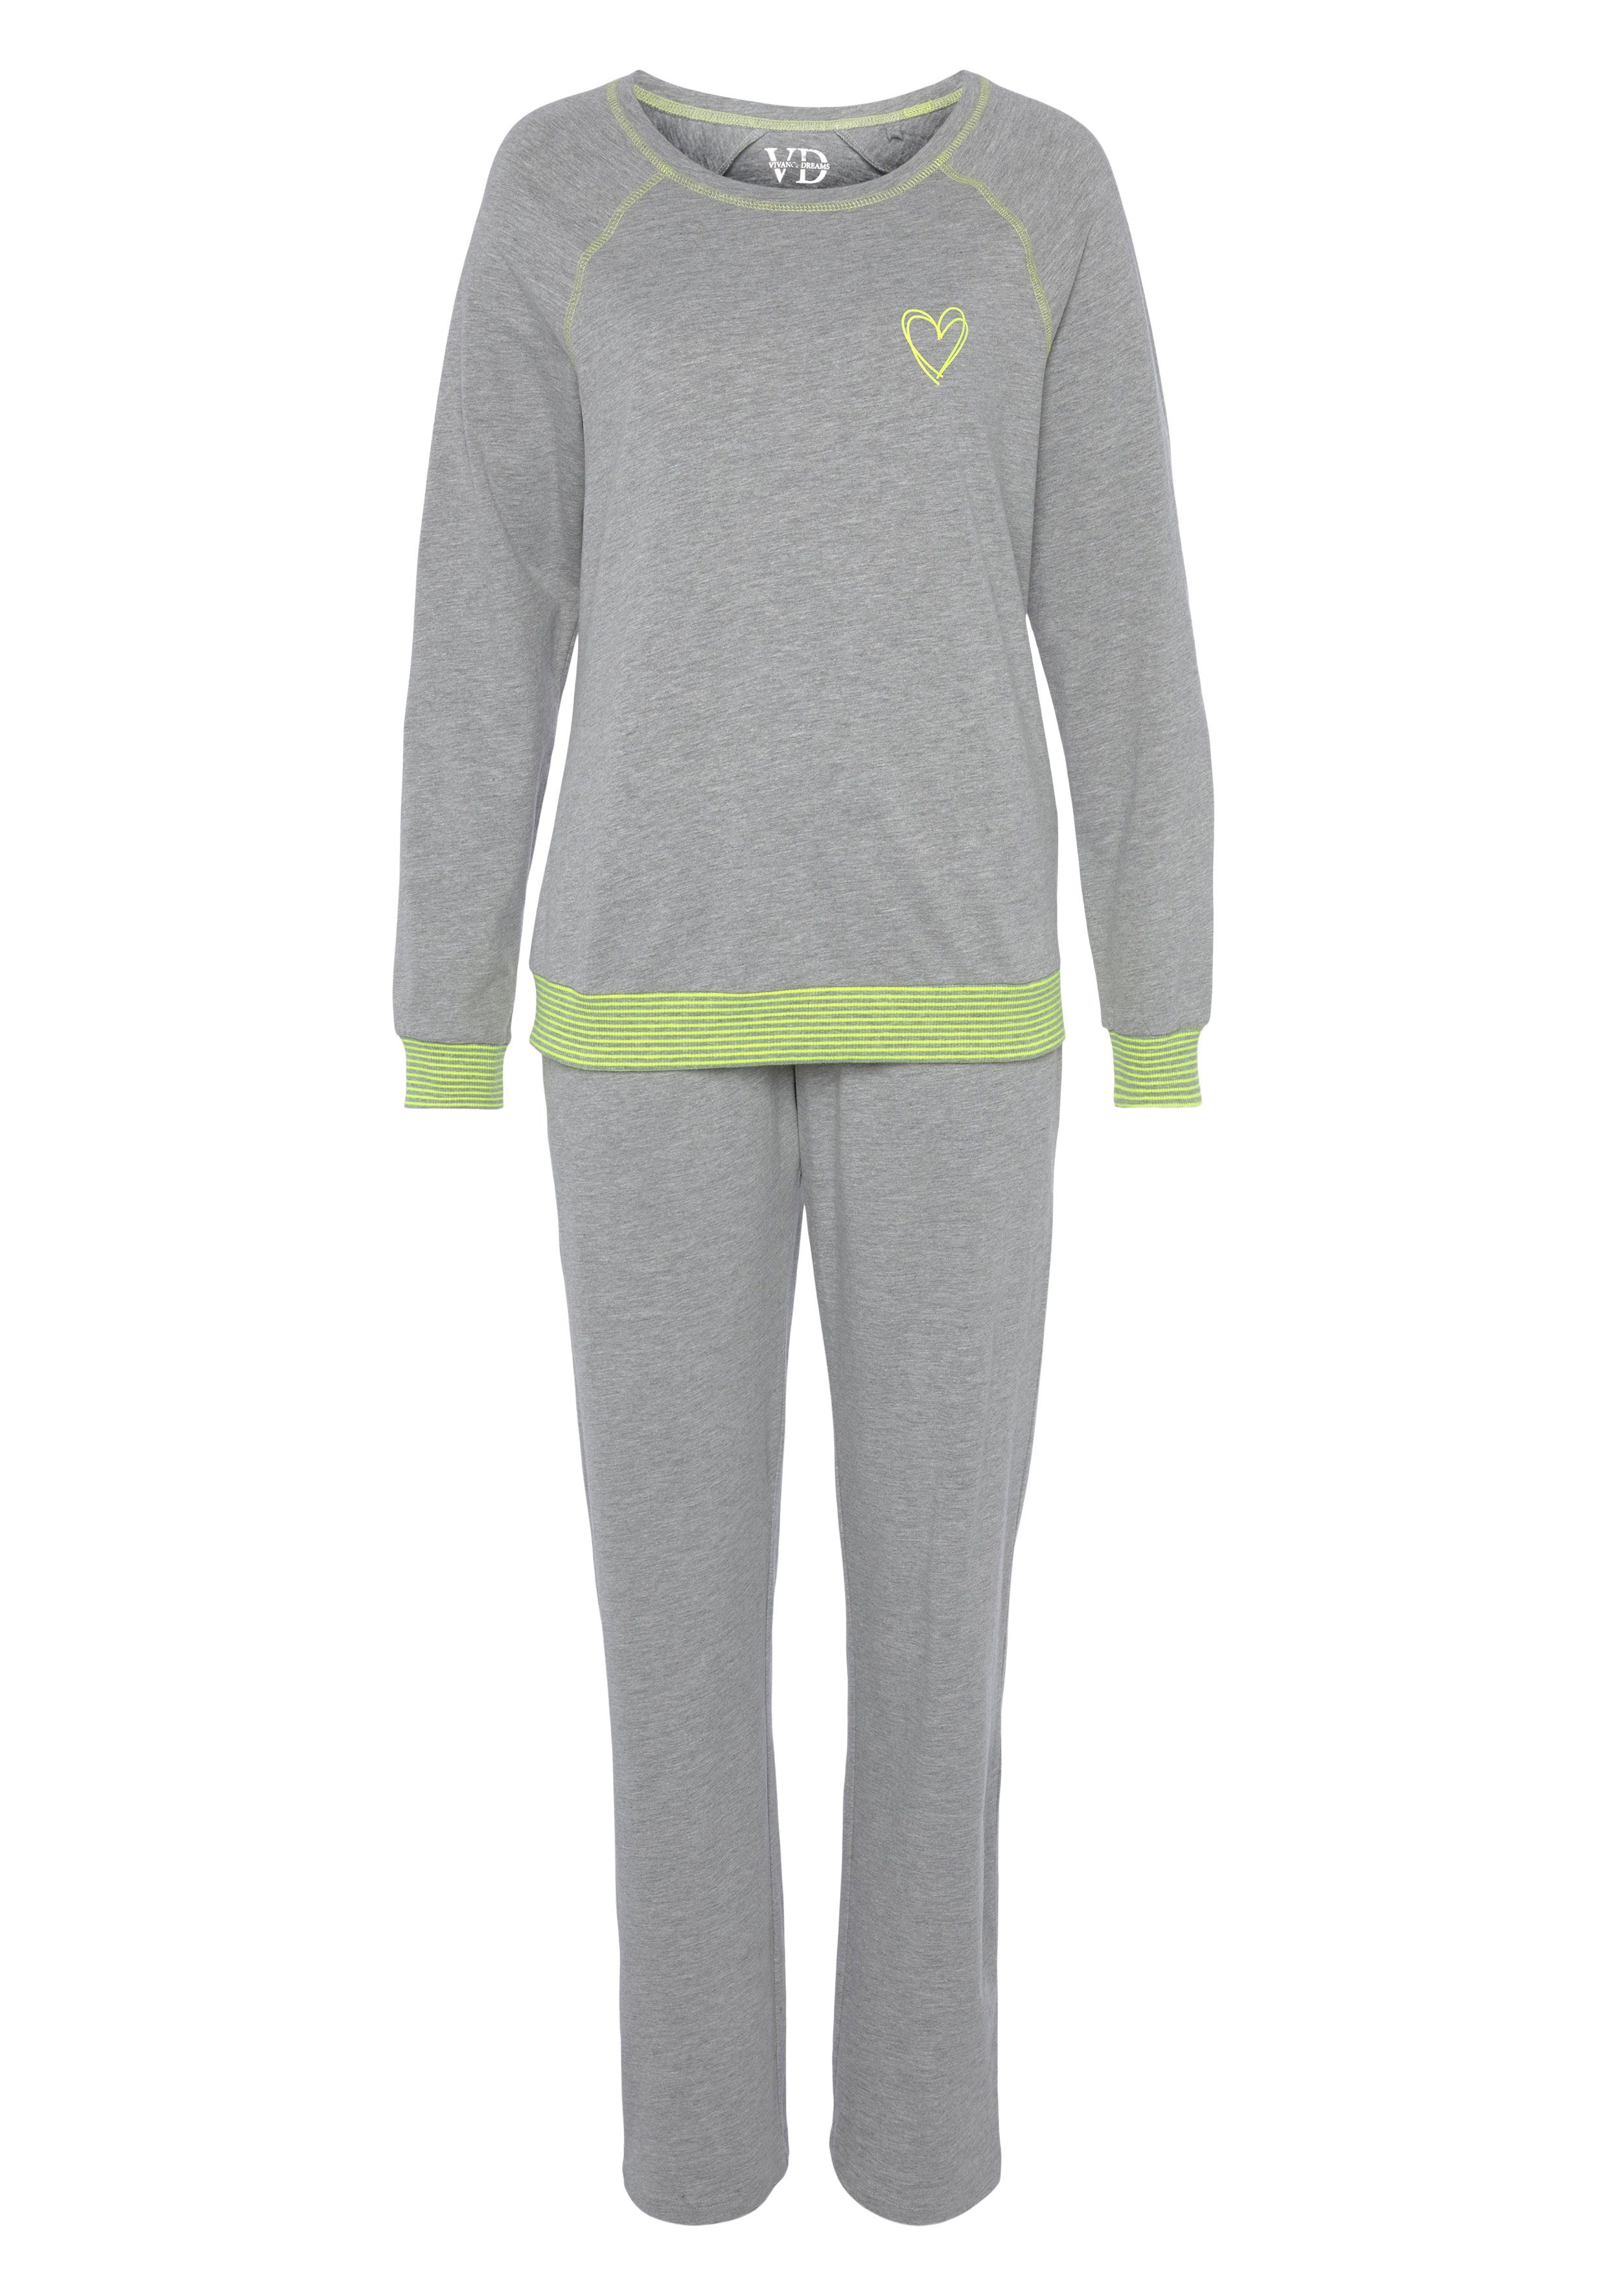 Vivance Dreams Pyjama dekorativen (2 tlg) Neonfarben in Flatlock-Nähten mit grau/neon-gelb